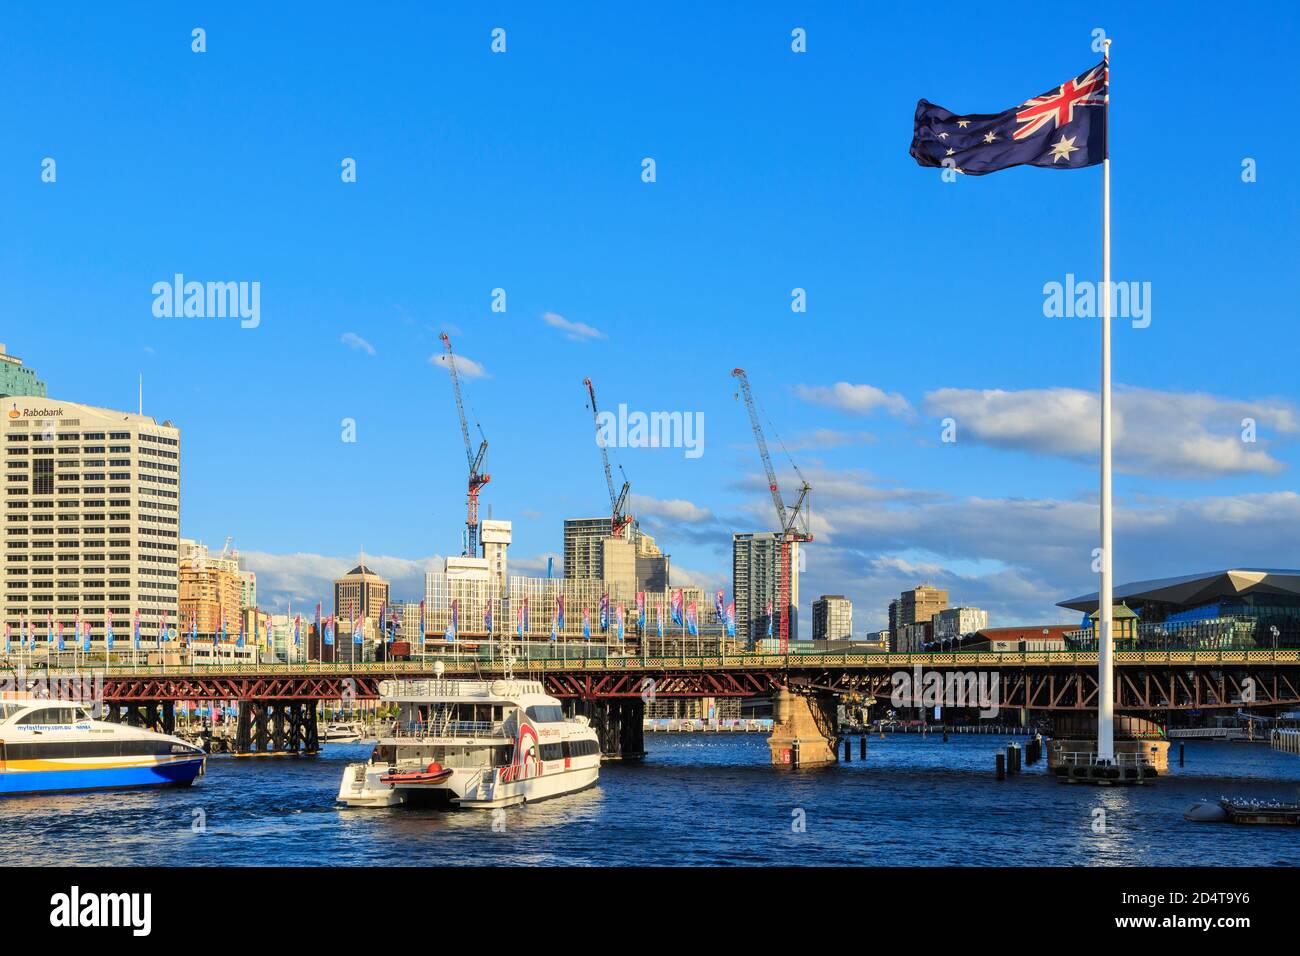 A giant Australian flag flies next to the historic Pyrmont Bridge in Darling Harbour, Sydney, Australia Stock Photo